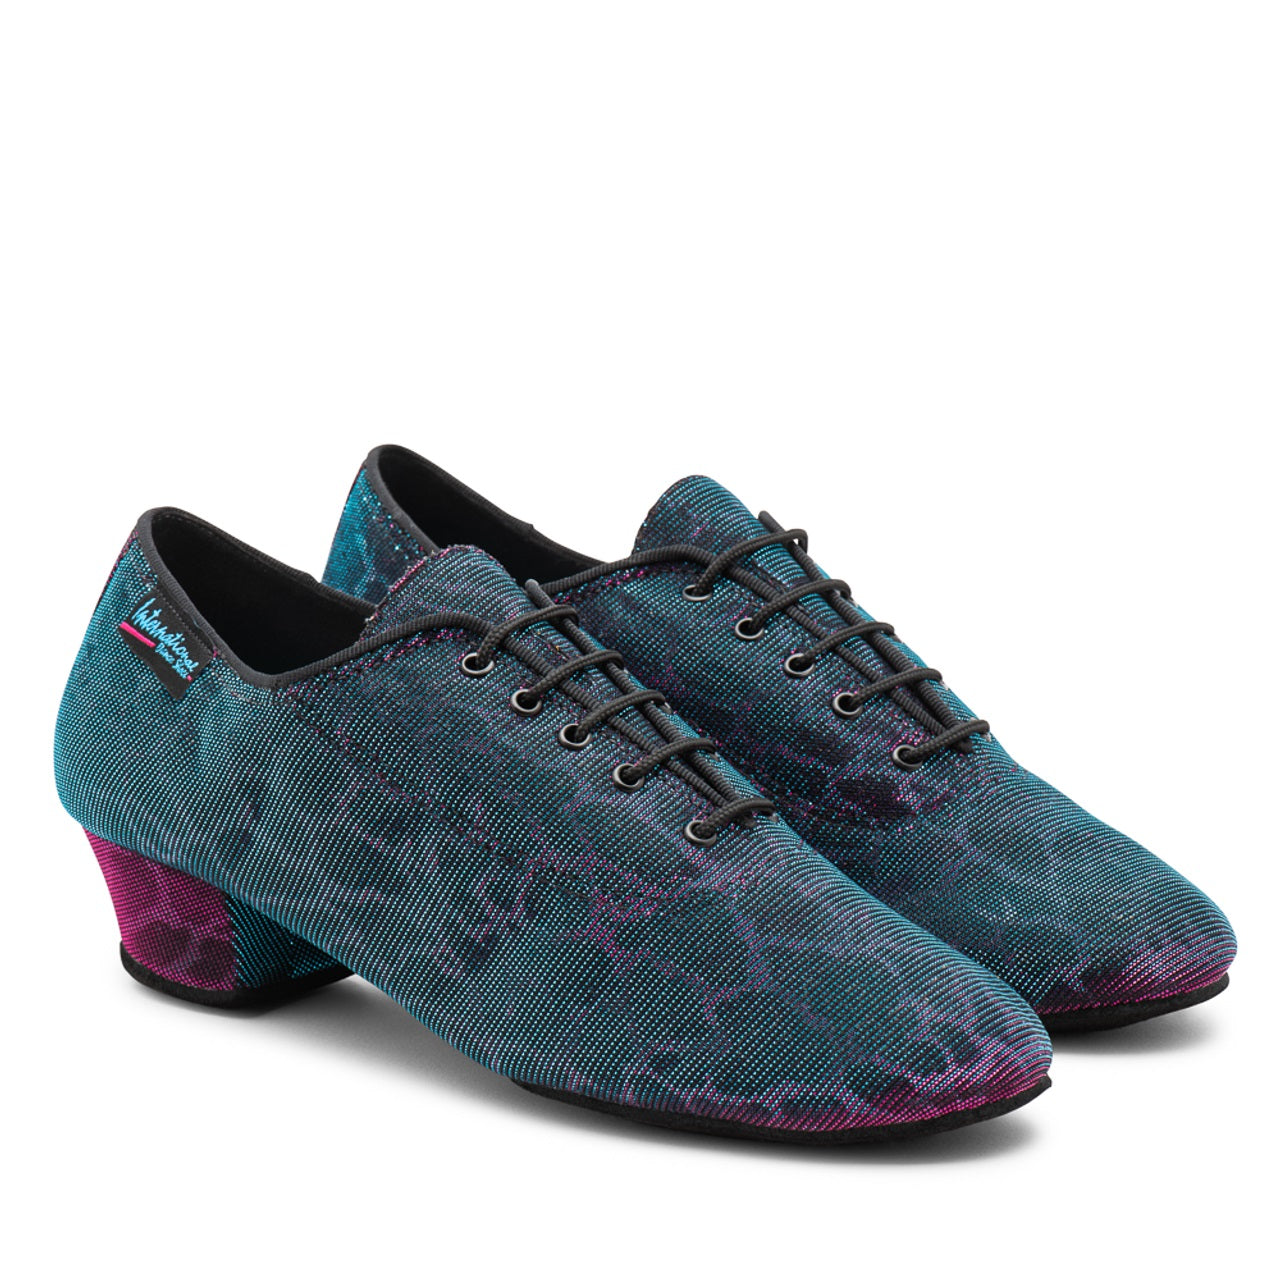 International Dance Shoes, Heather Split, Blue Pink Panther Print, 1.5” Heel